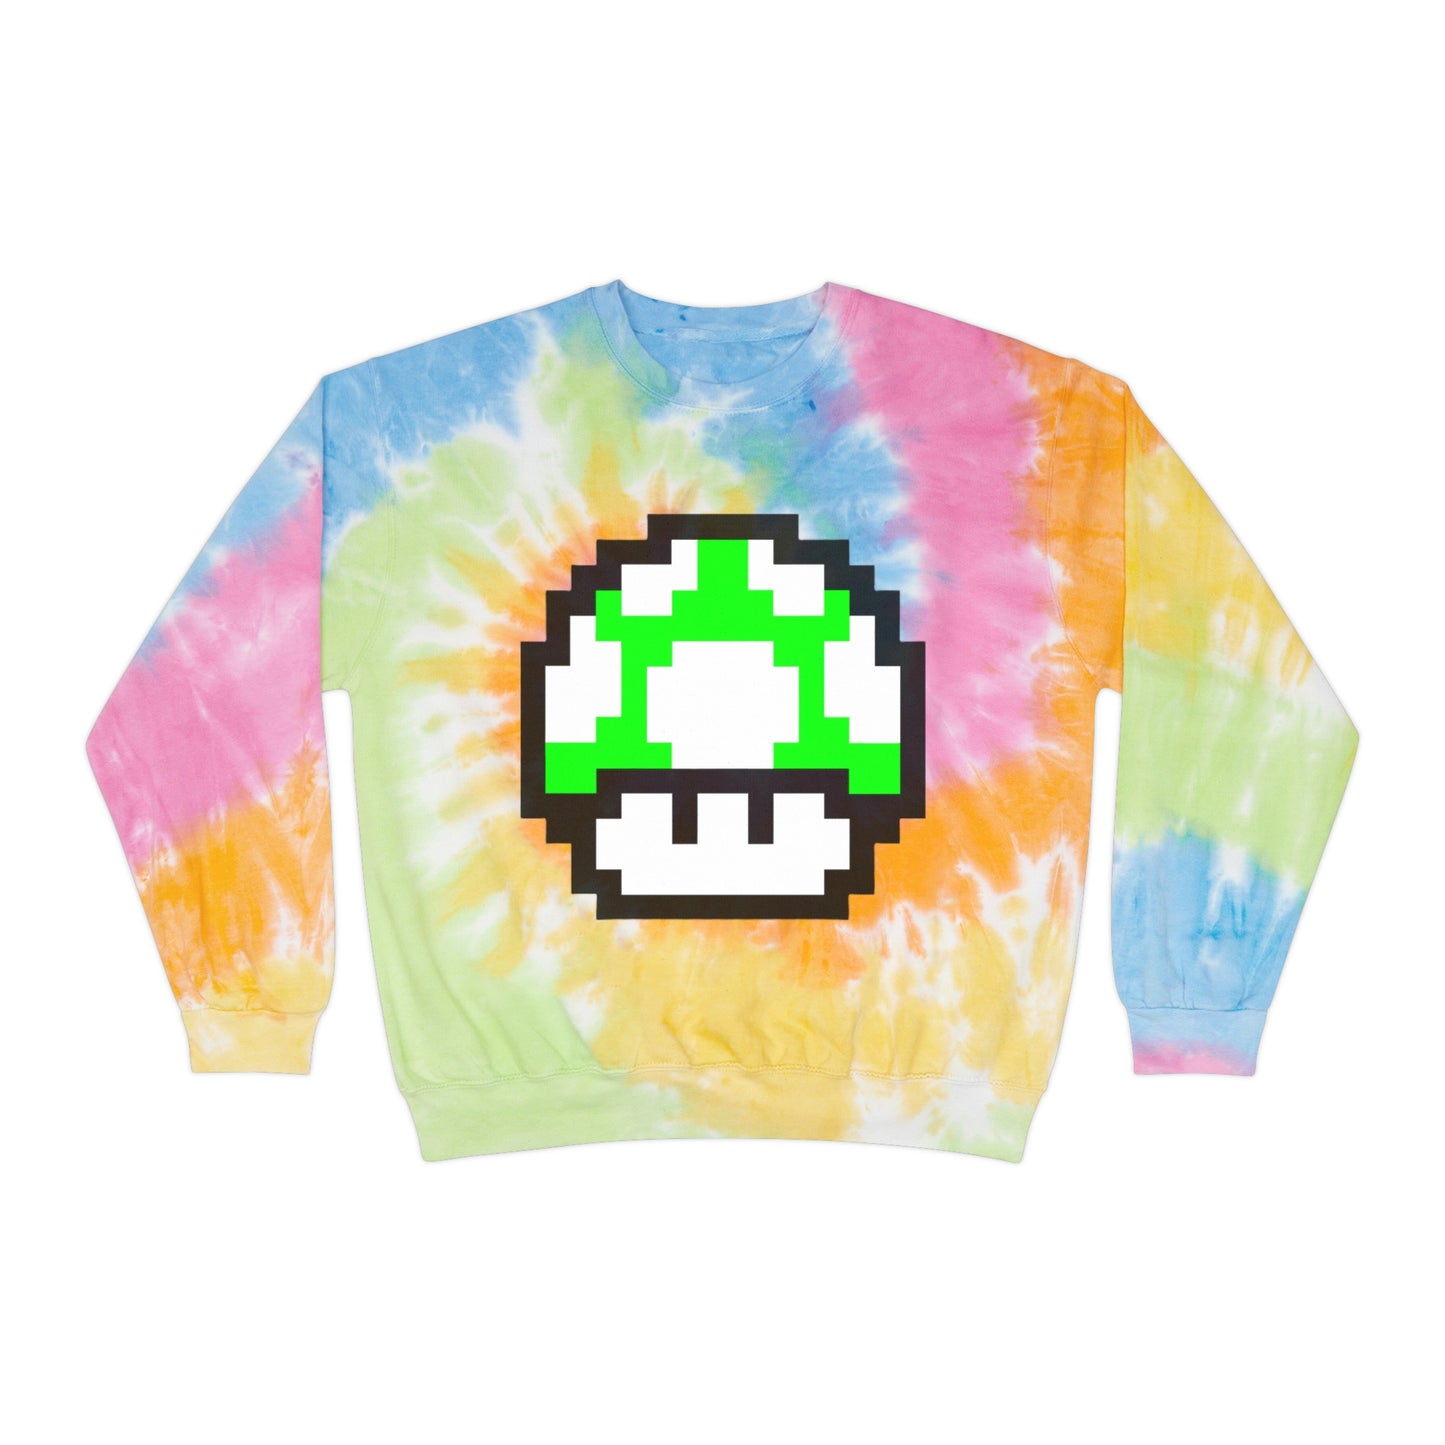 Mushroom 1UP 8 Bit Style Unisex Tie-Dye Sweatshirt